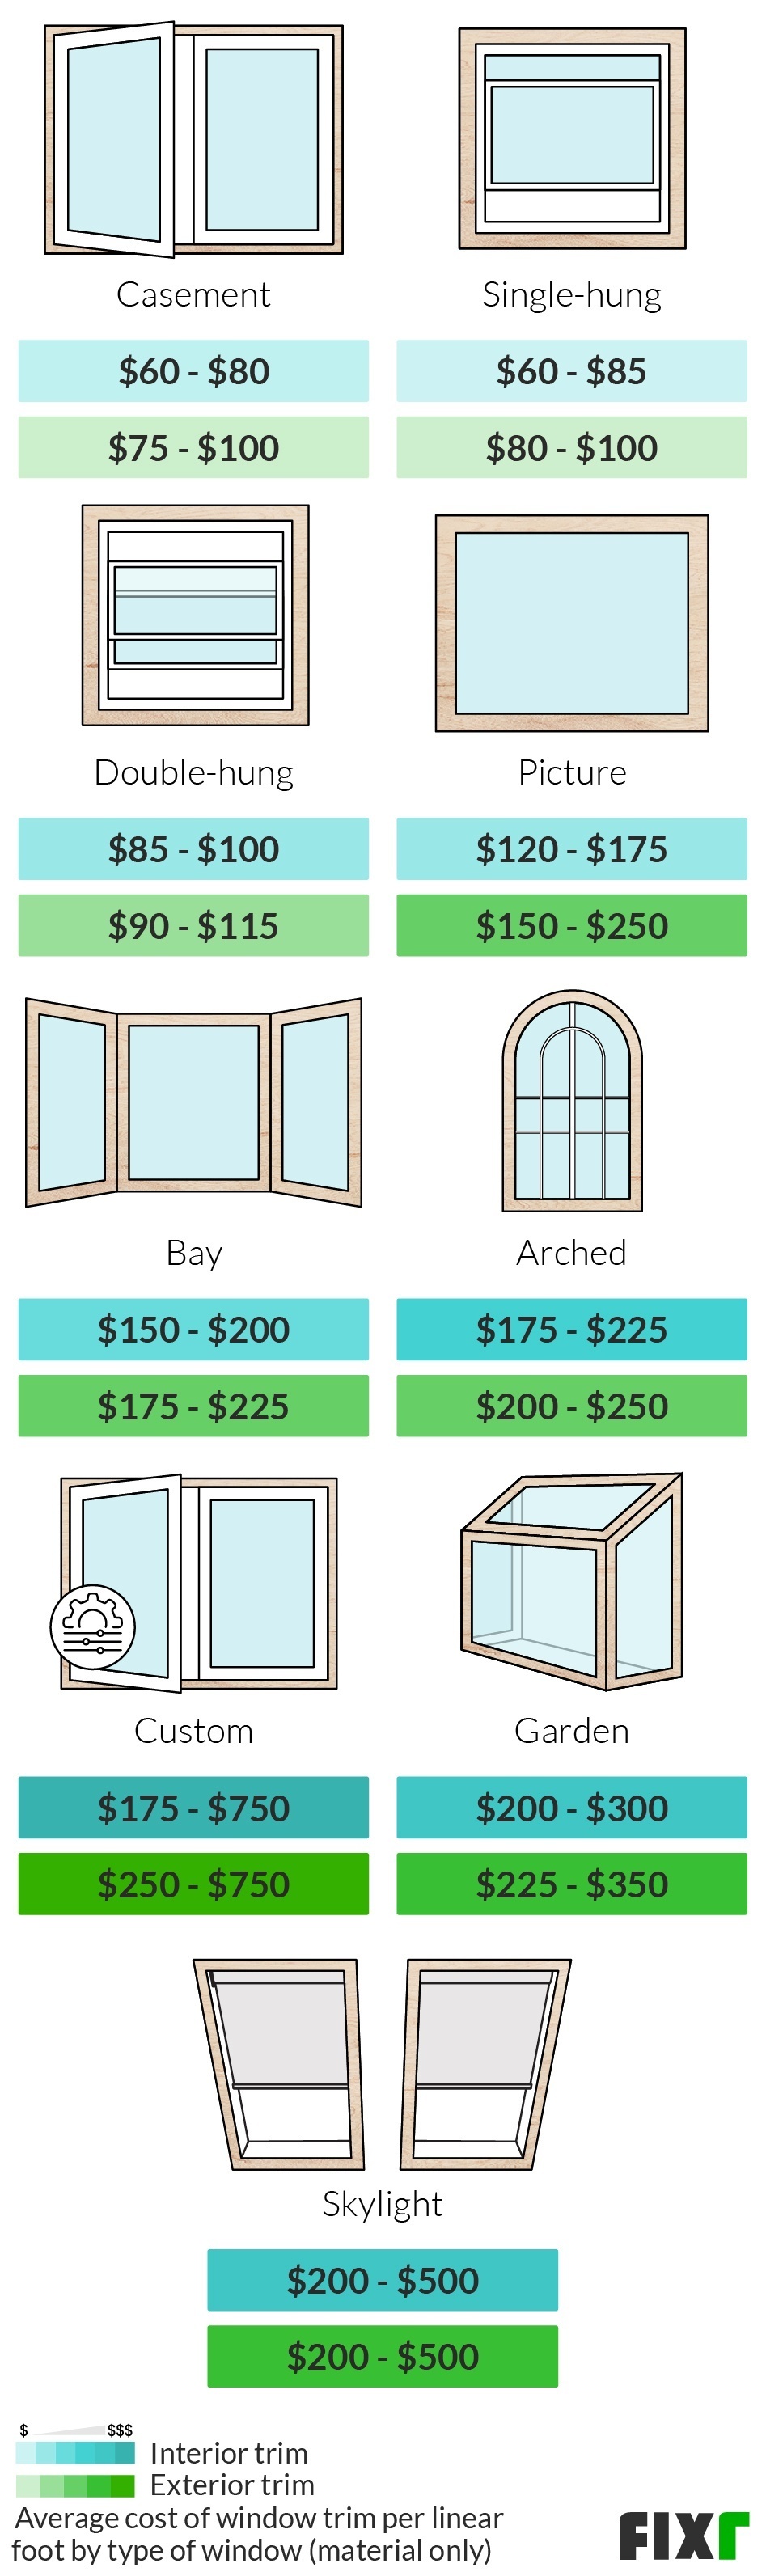 18 Cost to Install Window Trim   Window Trim Cost